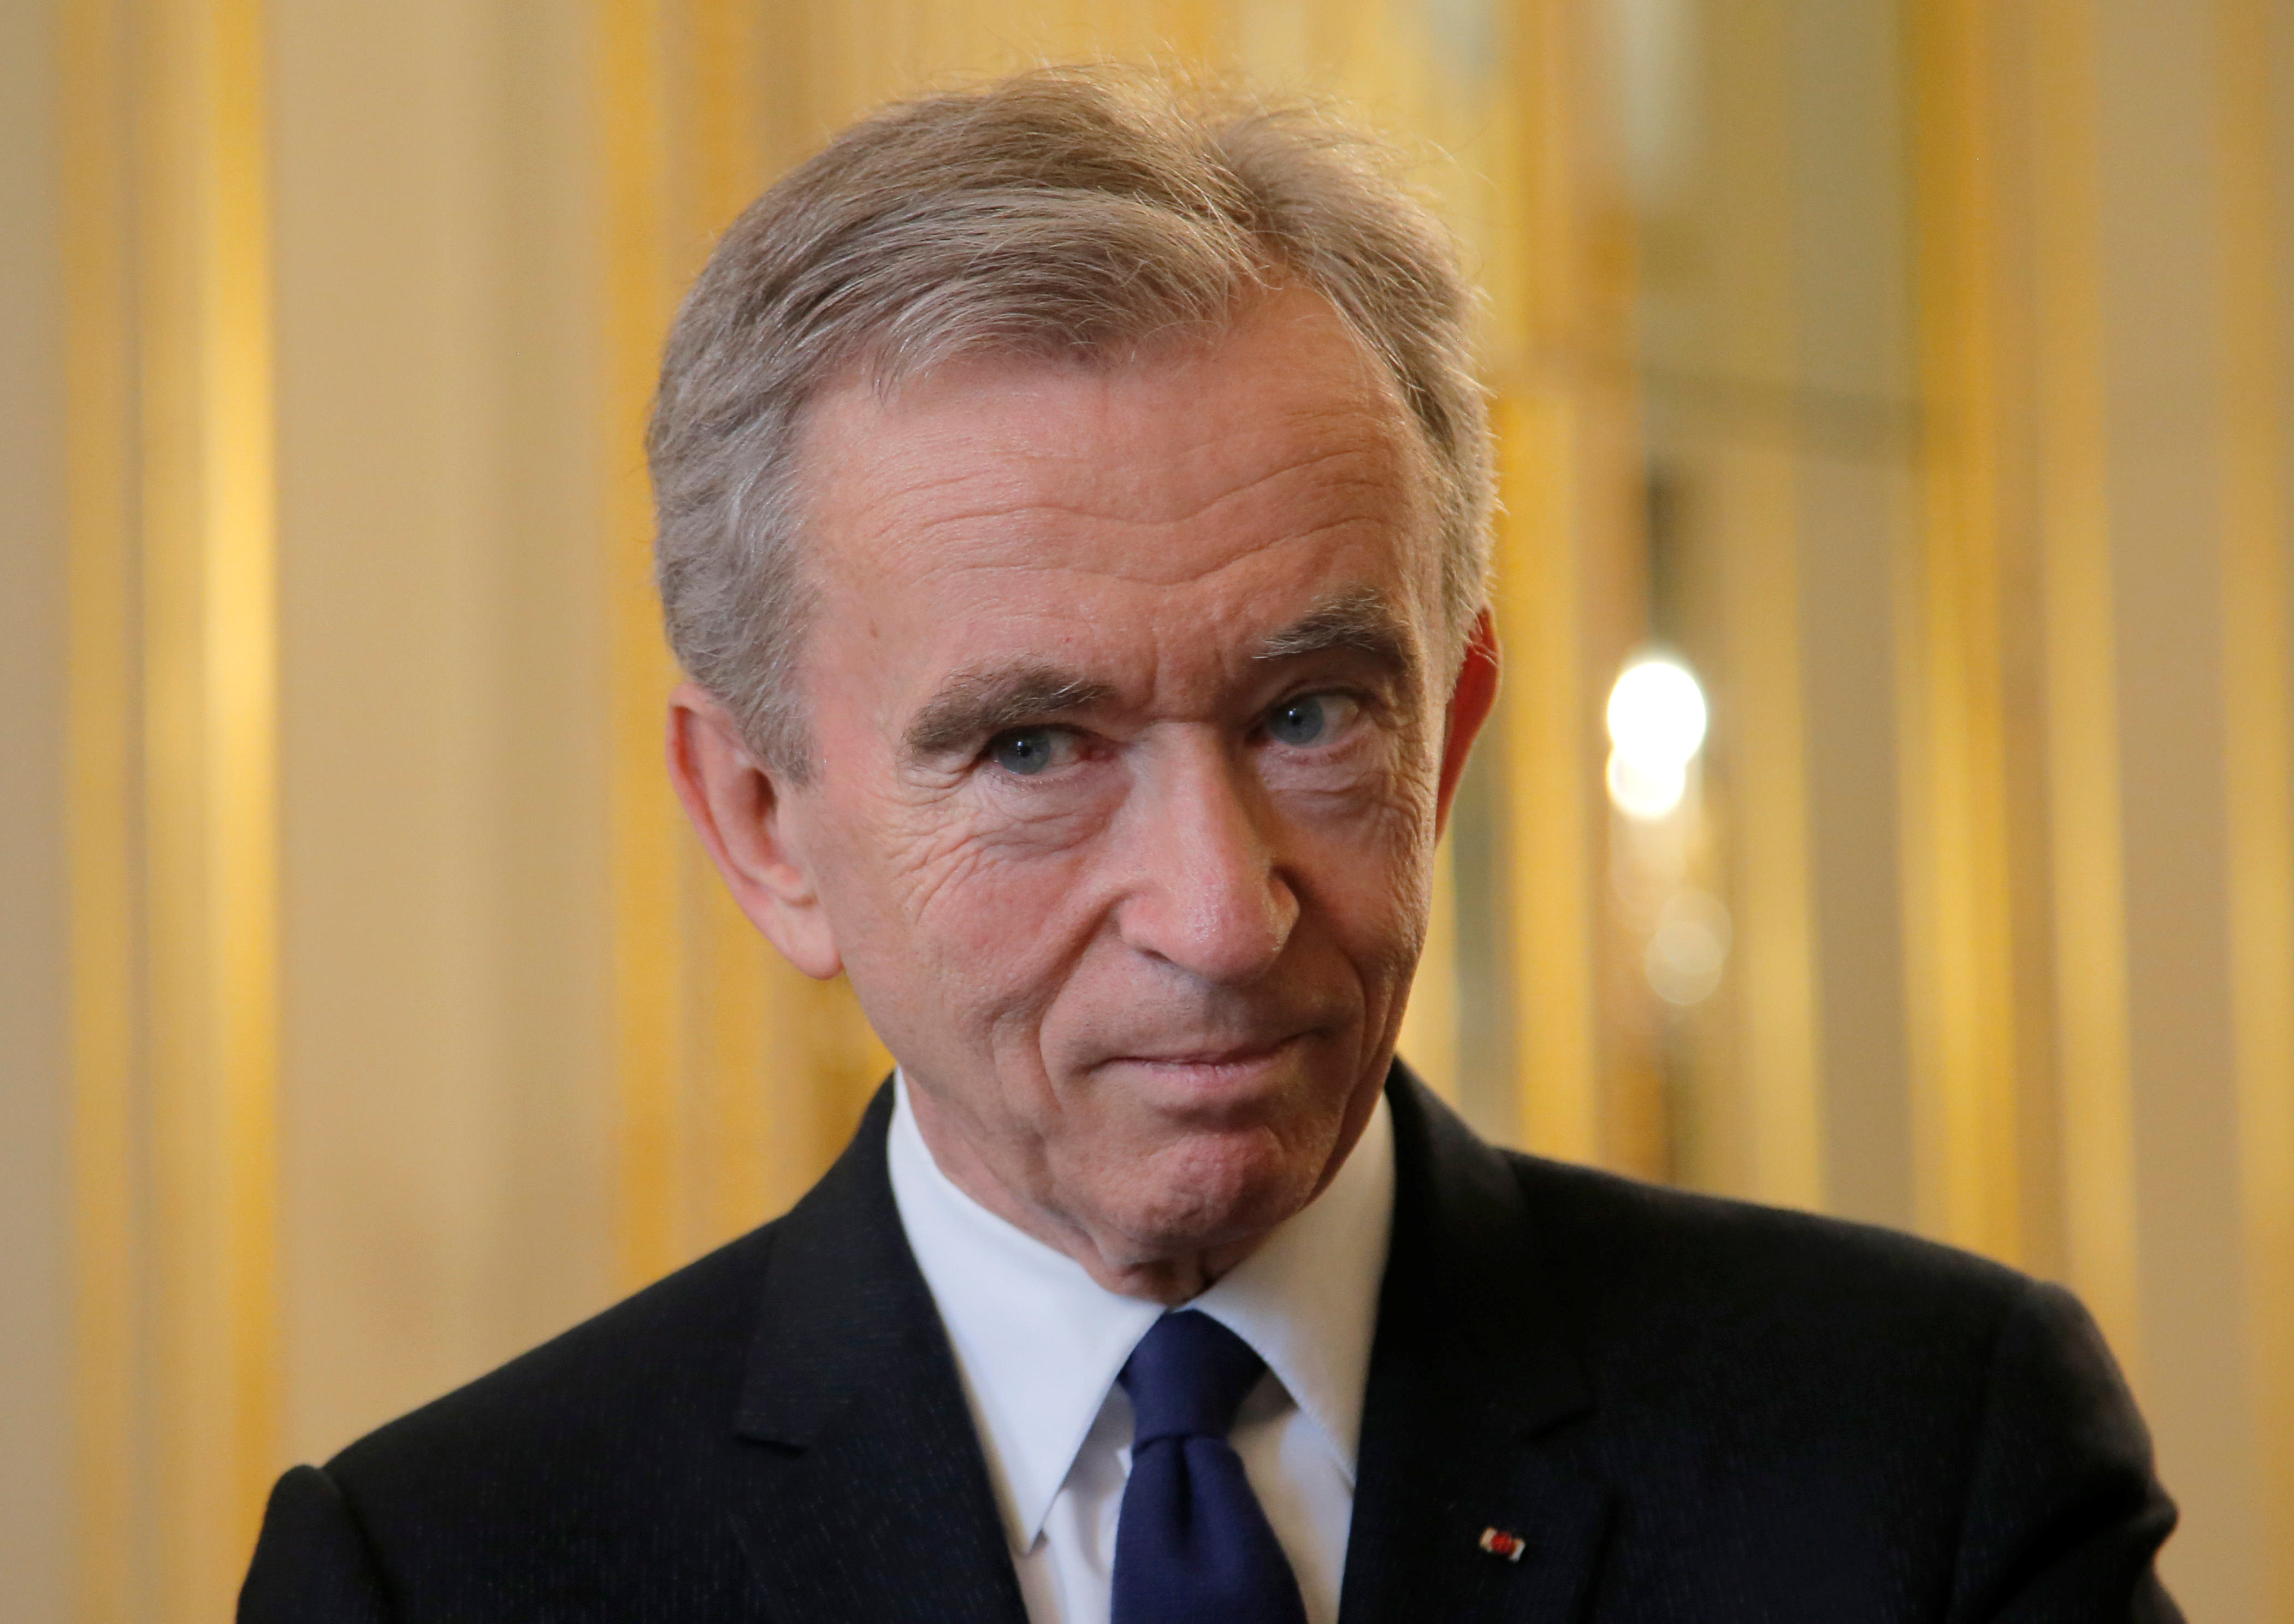 LVMH CEO Bernard Arnault wins bid to stay on until he is 80, not